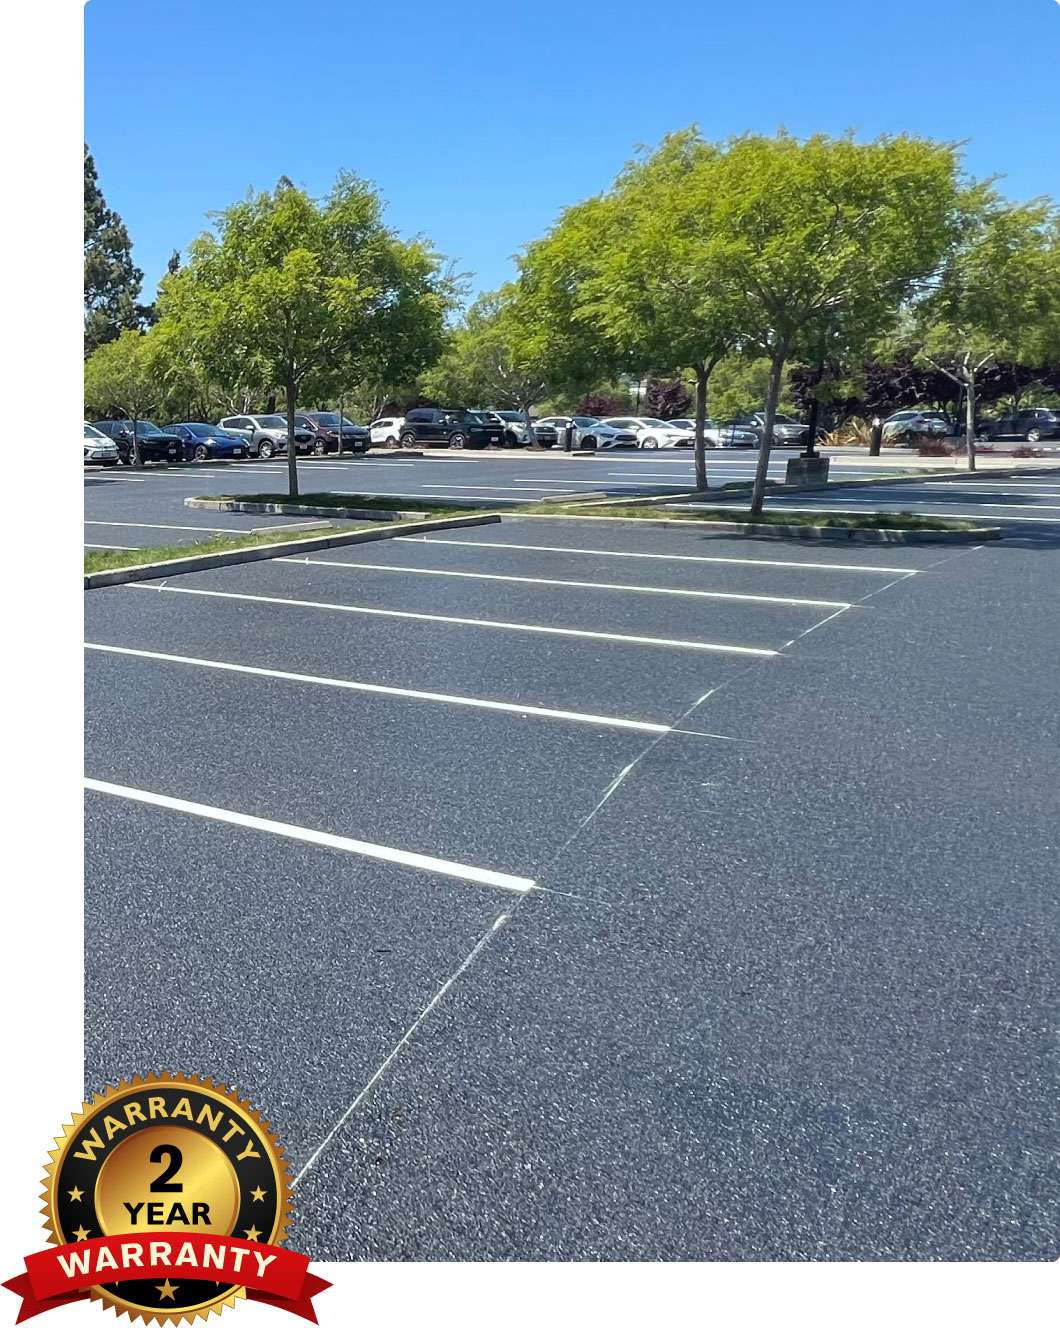 calvac paving asphalt paving parking lot in San Jose 2 year warranty